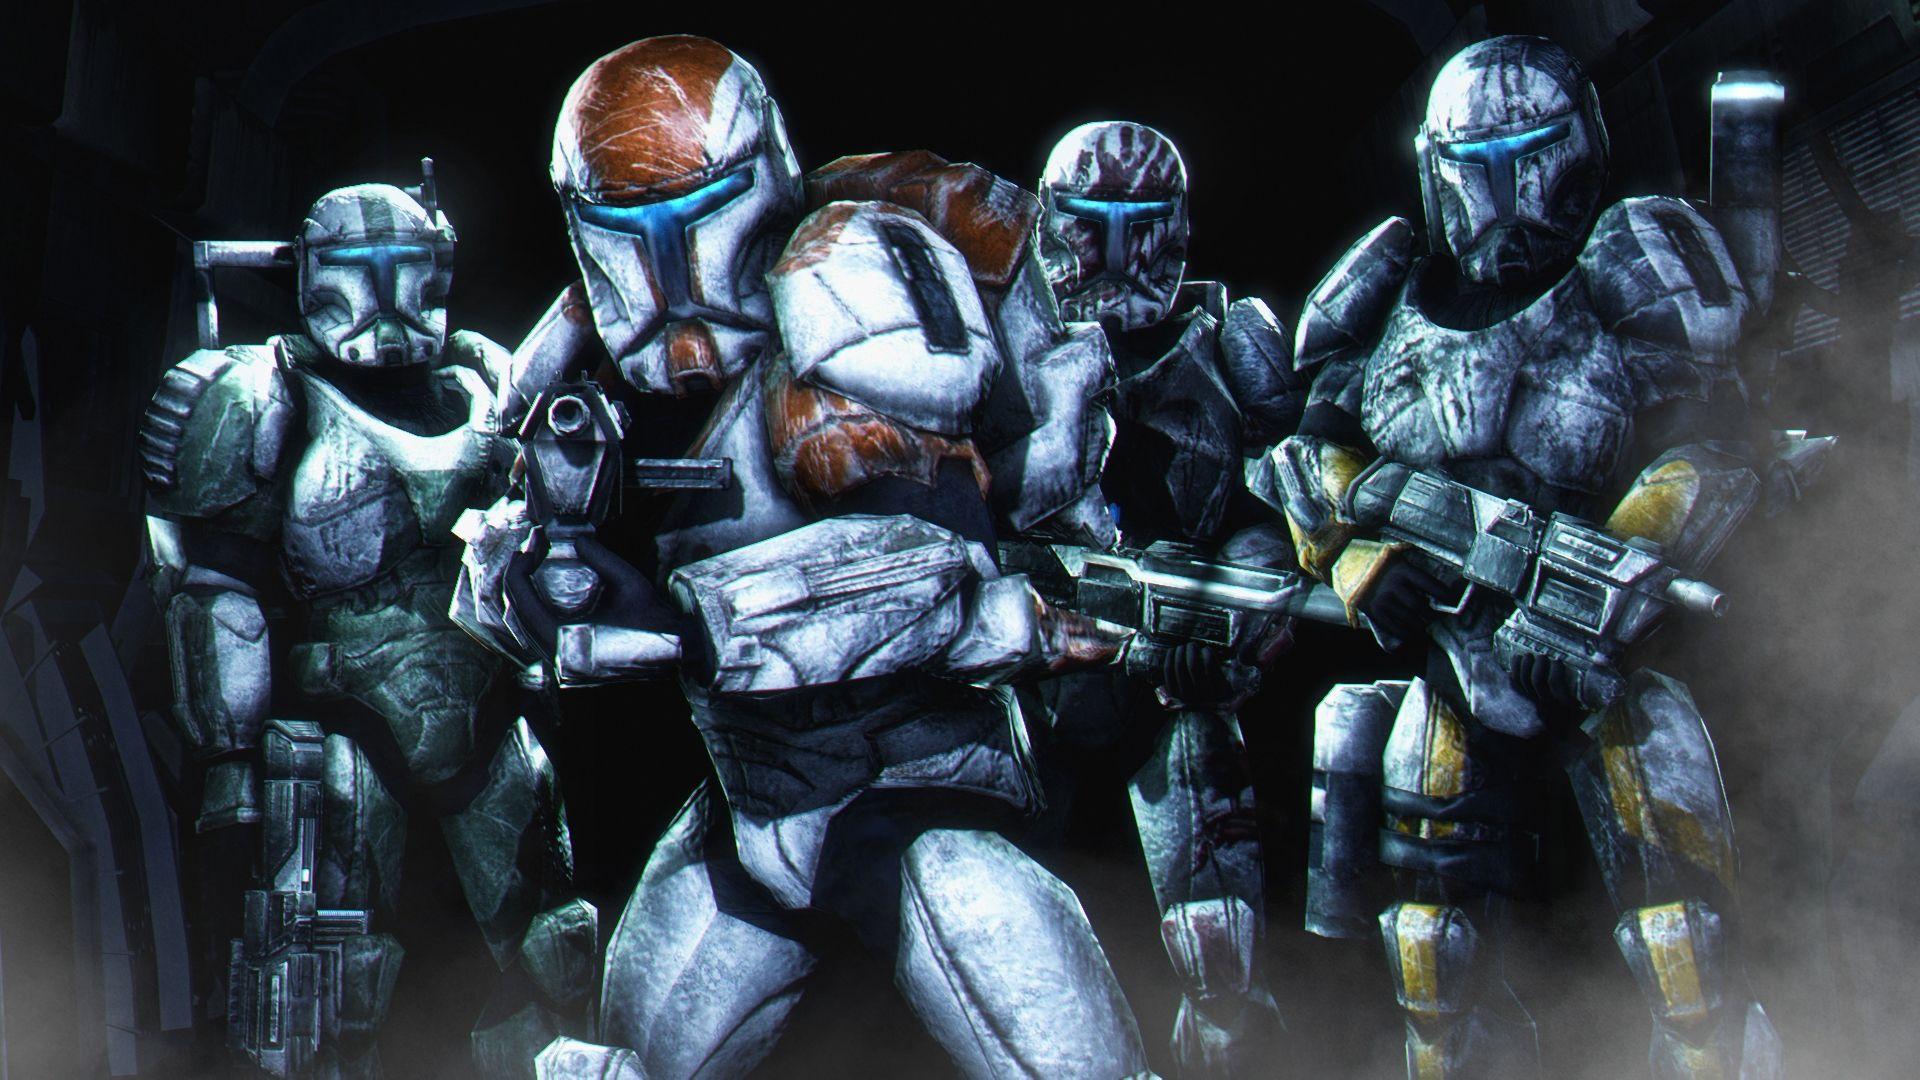 Republic Commandos run the SW Trooper gauntlet